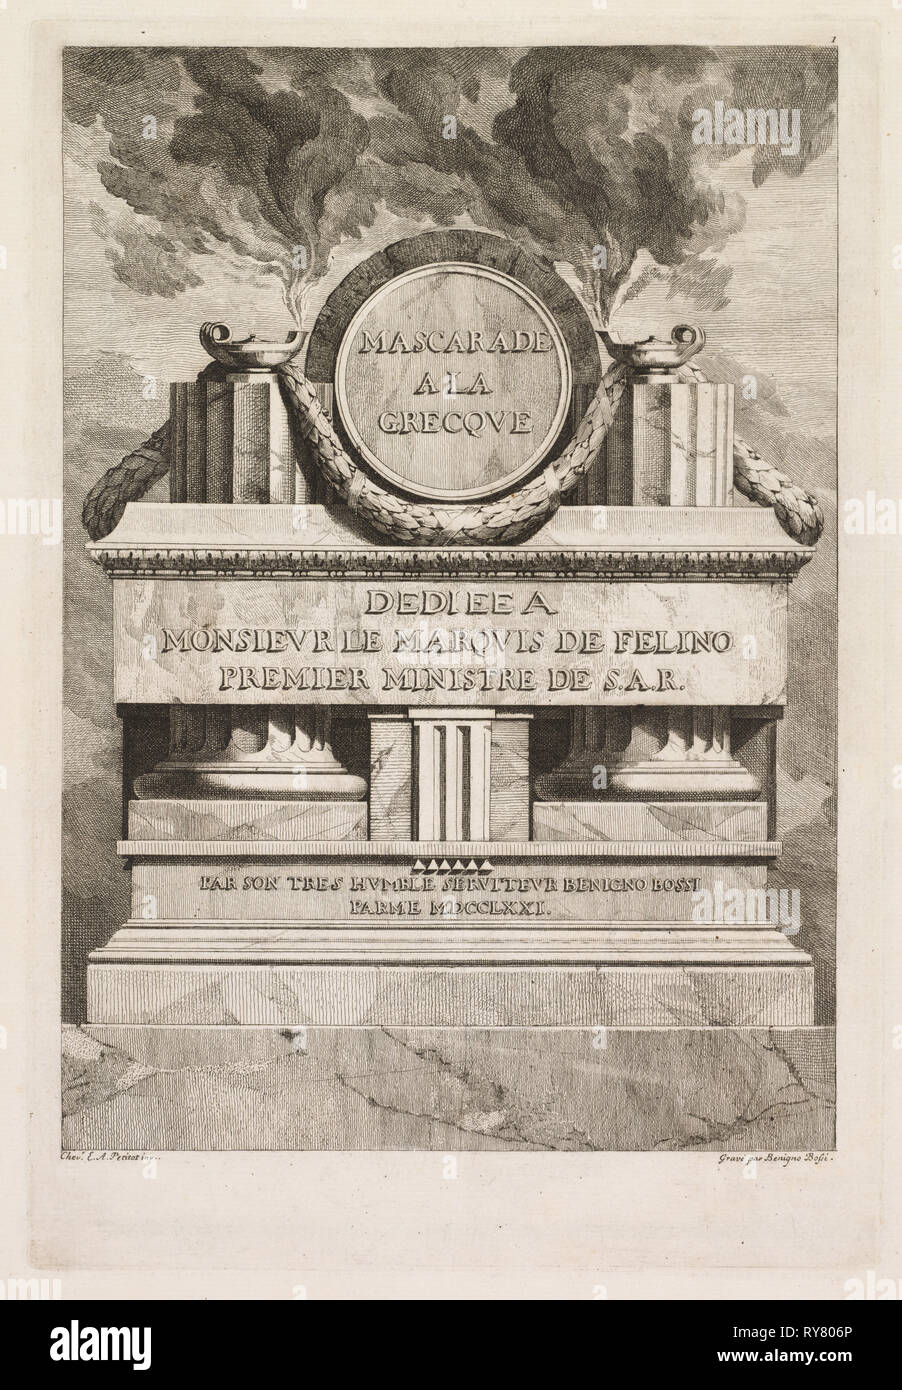 Mascarade à la Grecque: Dedication Page, 1771. Benigno Bossi (Italian, 1727-1792). Etching Stock Photo